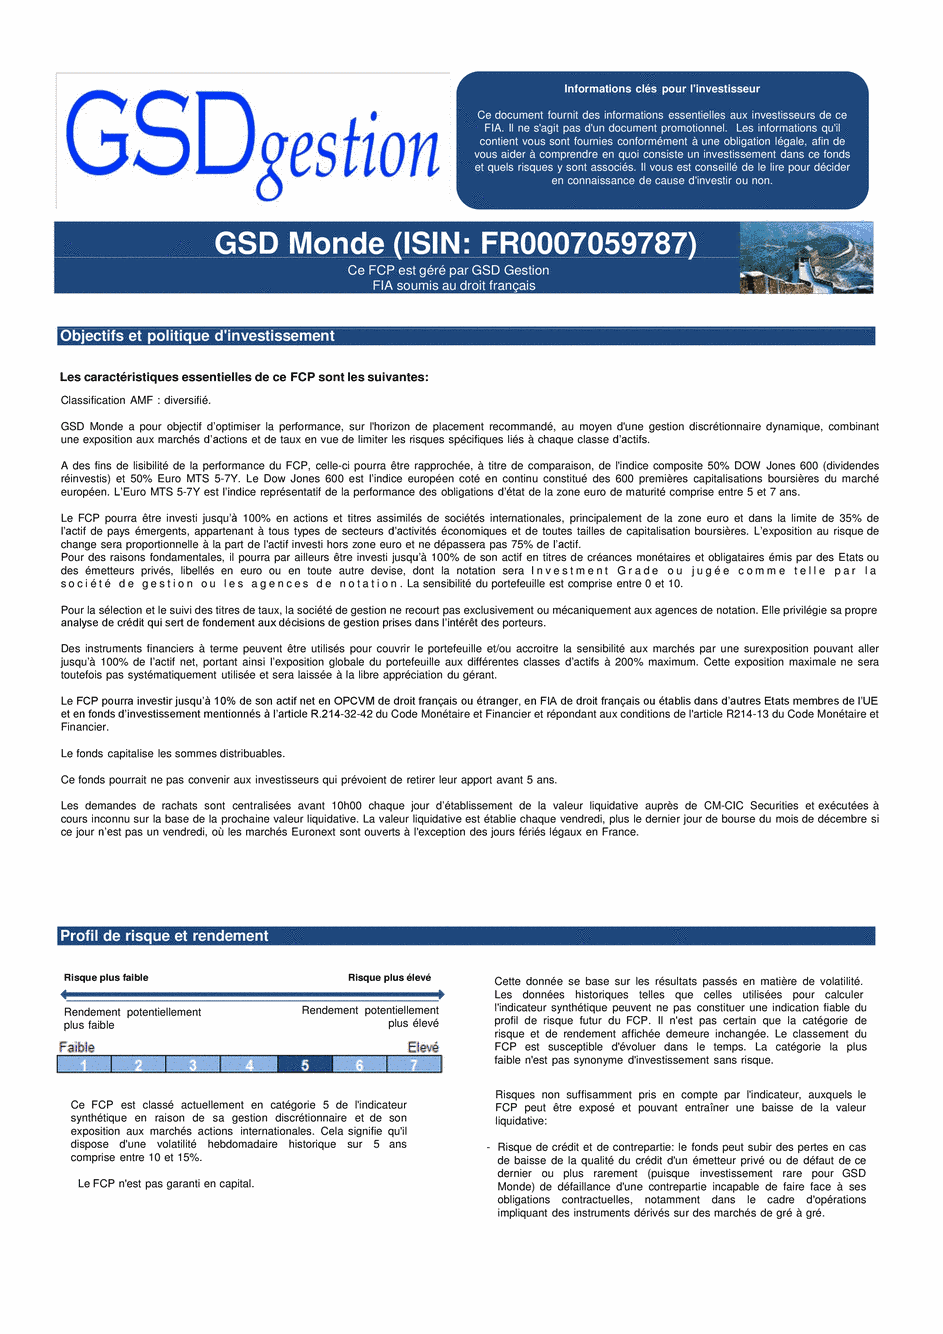 DICI-Prospectus GSD Monde - 29/04/2015 - Français